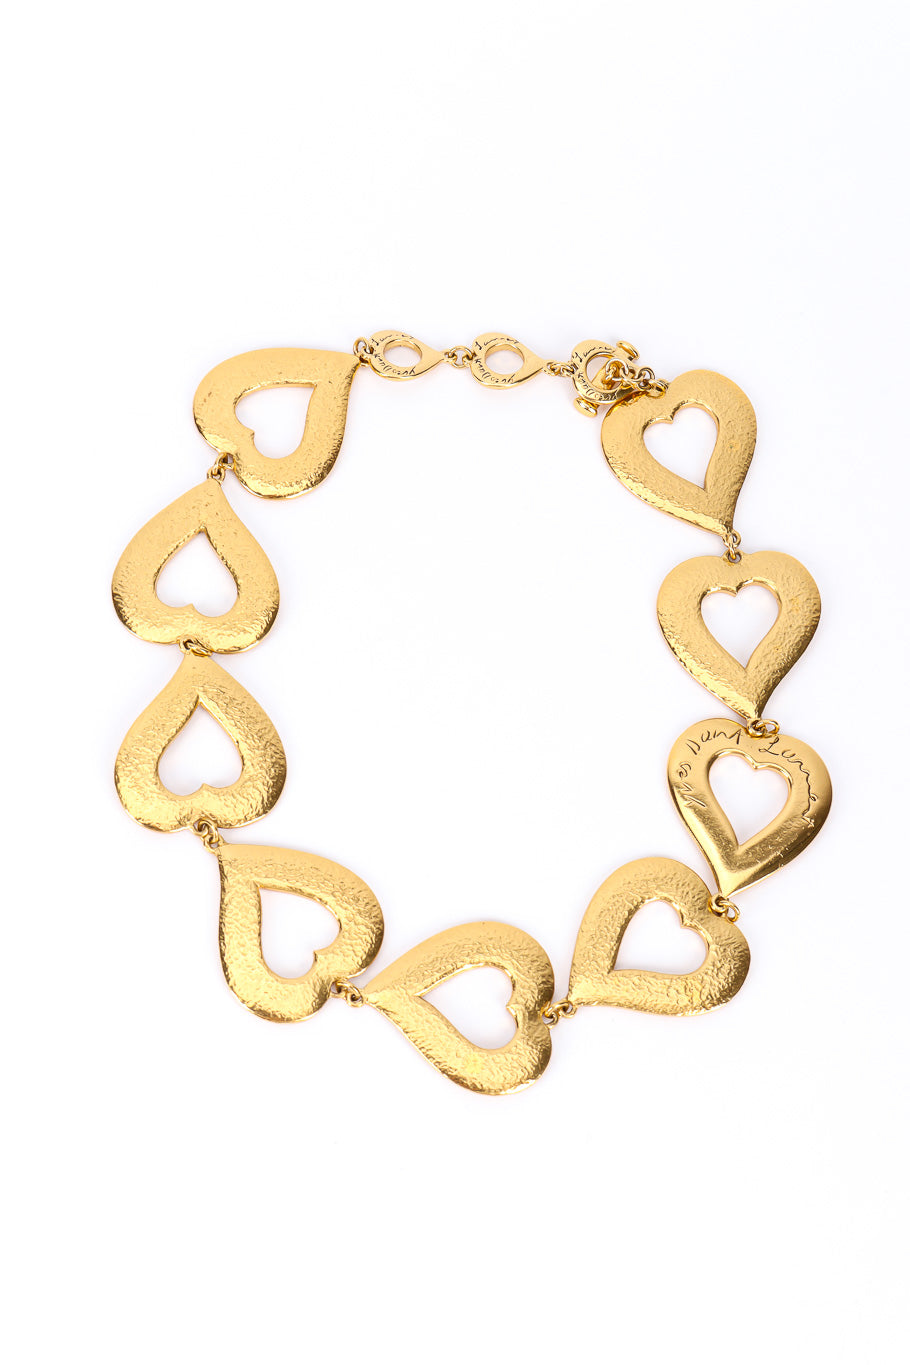 Vintage Yves Saint Laurent Heart Pendant Collar Necklace full front view @Recessla